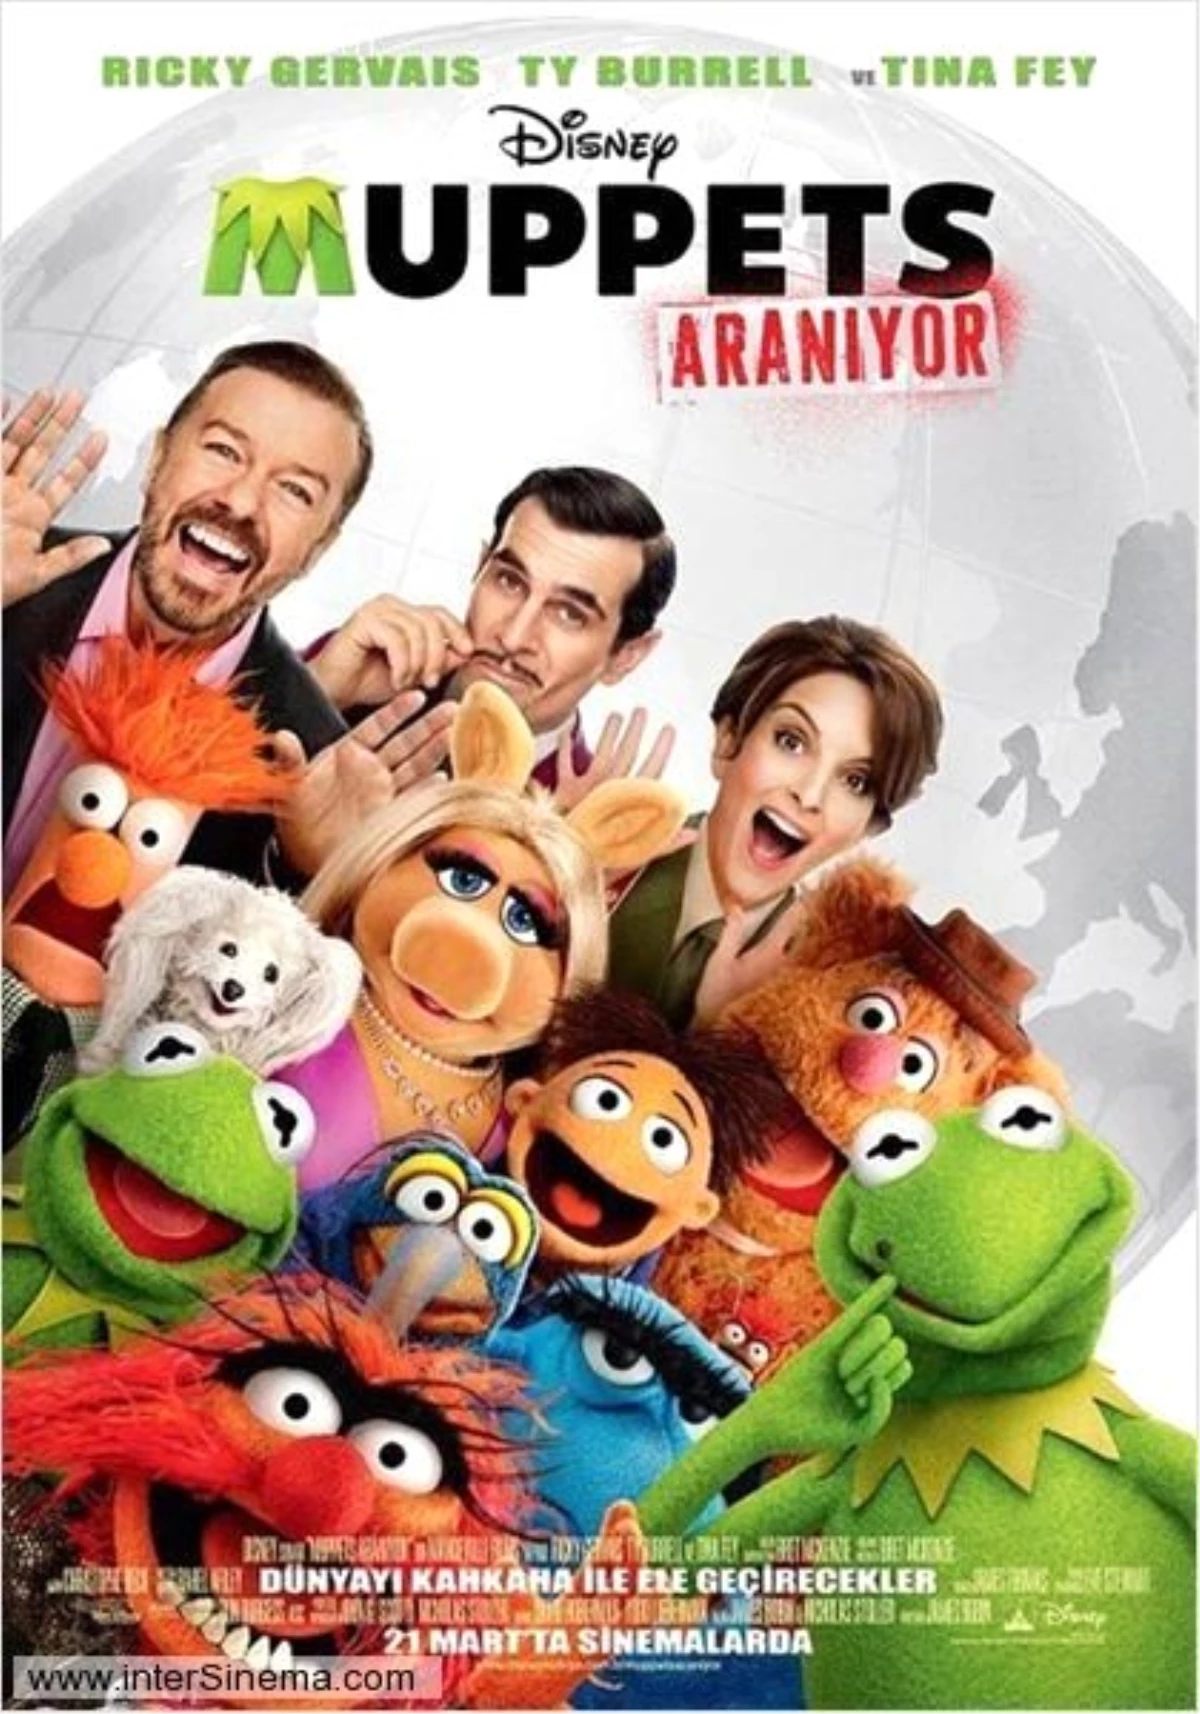 Muppets Aranıyor Filmi